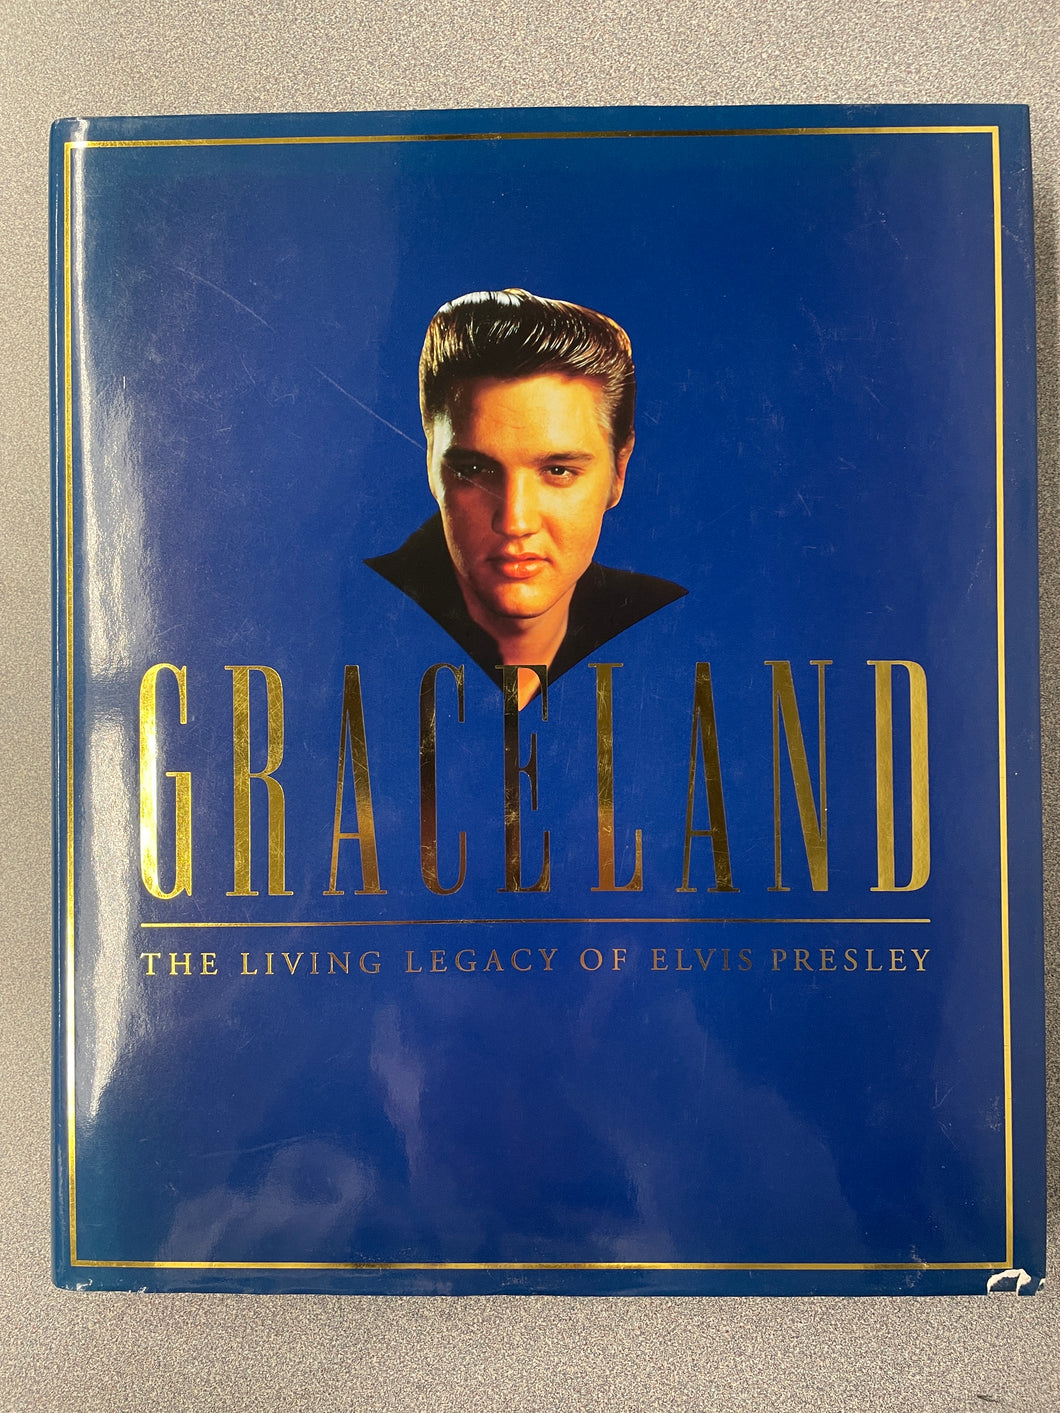 Graceland: The Living Legacy of Elvis Presley, Evans, Mike, ed. [1993] EP 12/23